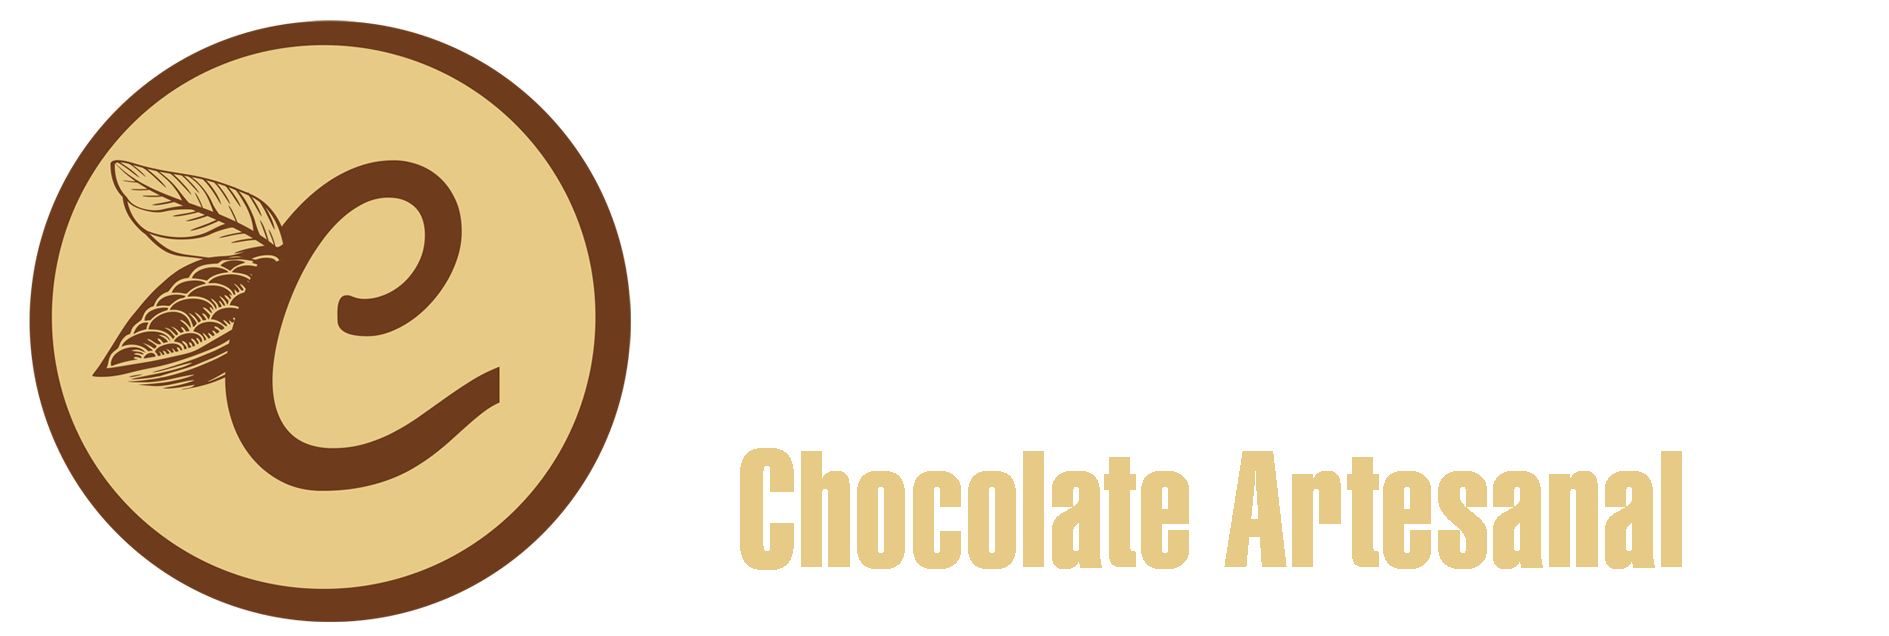 Chocolad